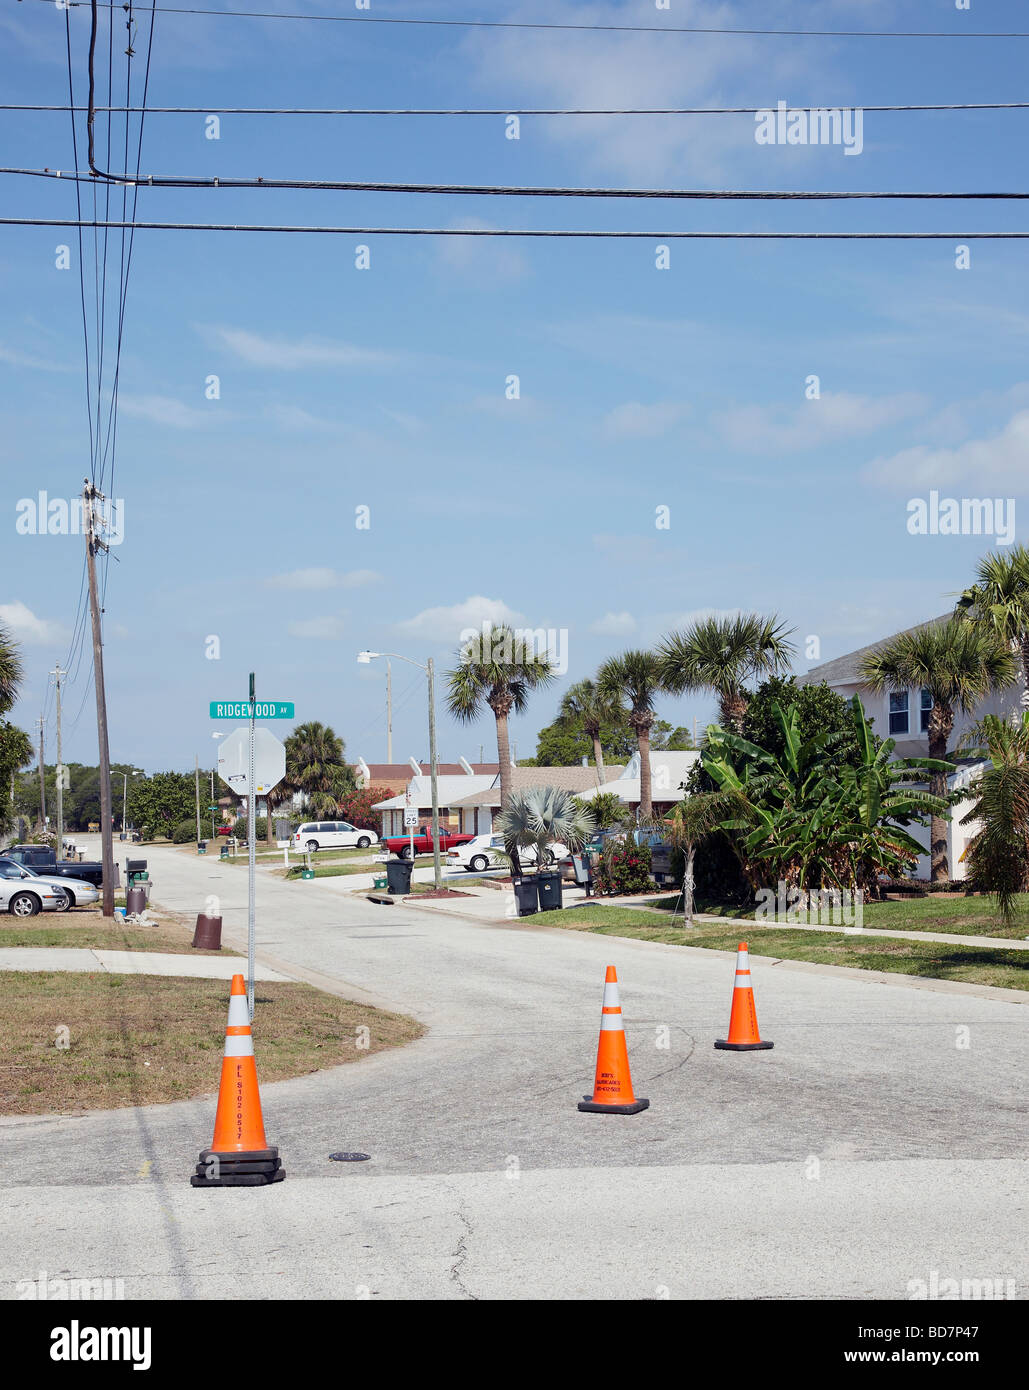 USA America American Florida Cape Canaveral cones traffic bollards warning safety block road drive sun blue sky orange Stock Photo